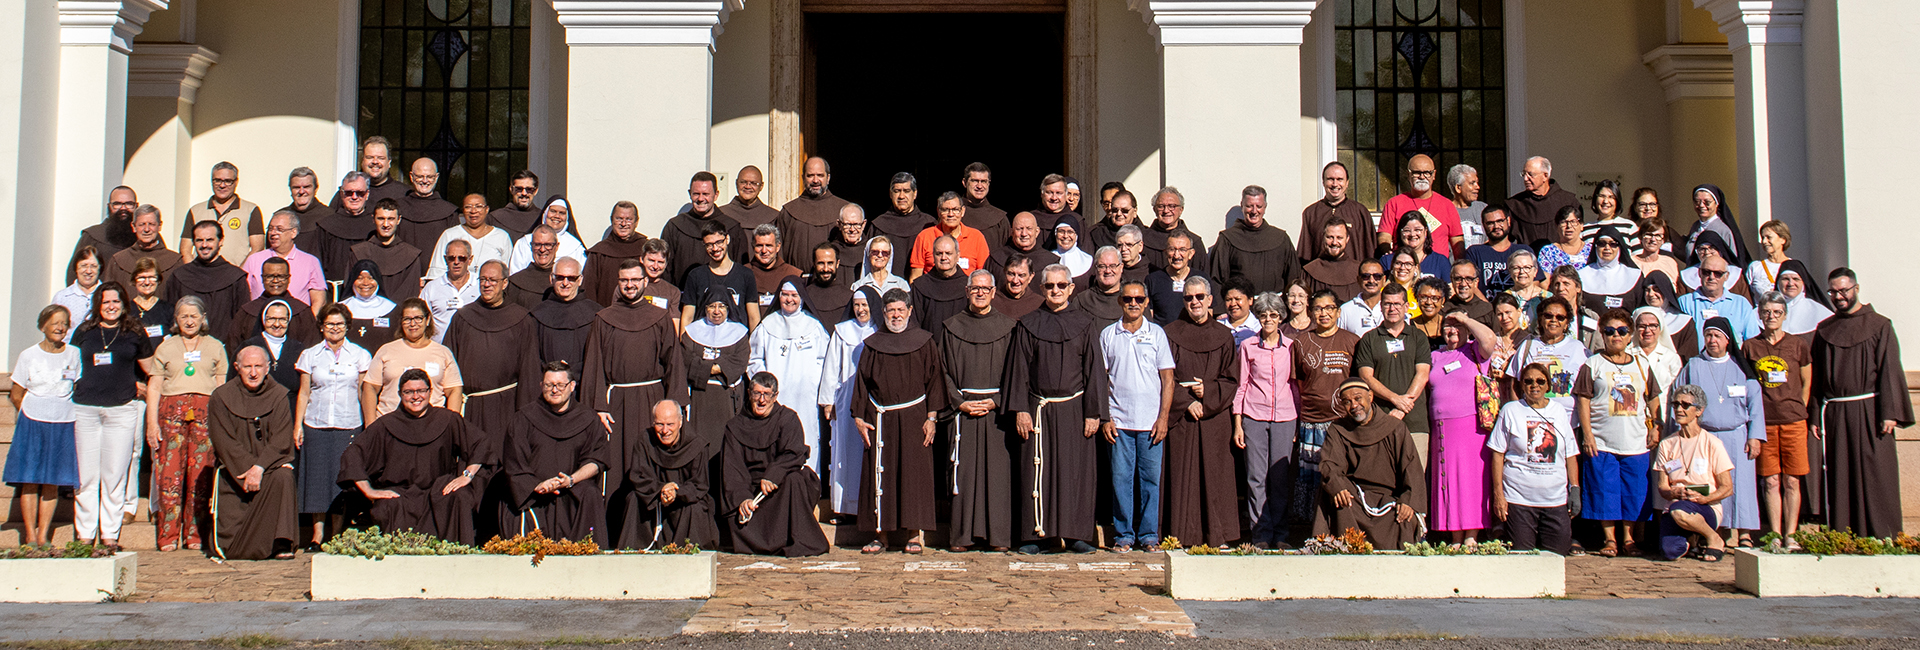 Capítulo Geral das Esteiras é marco histórico para Província Franciscana da Imaculada